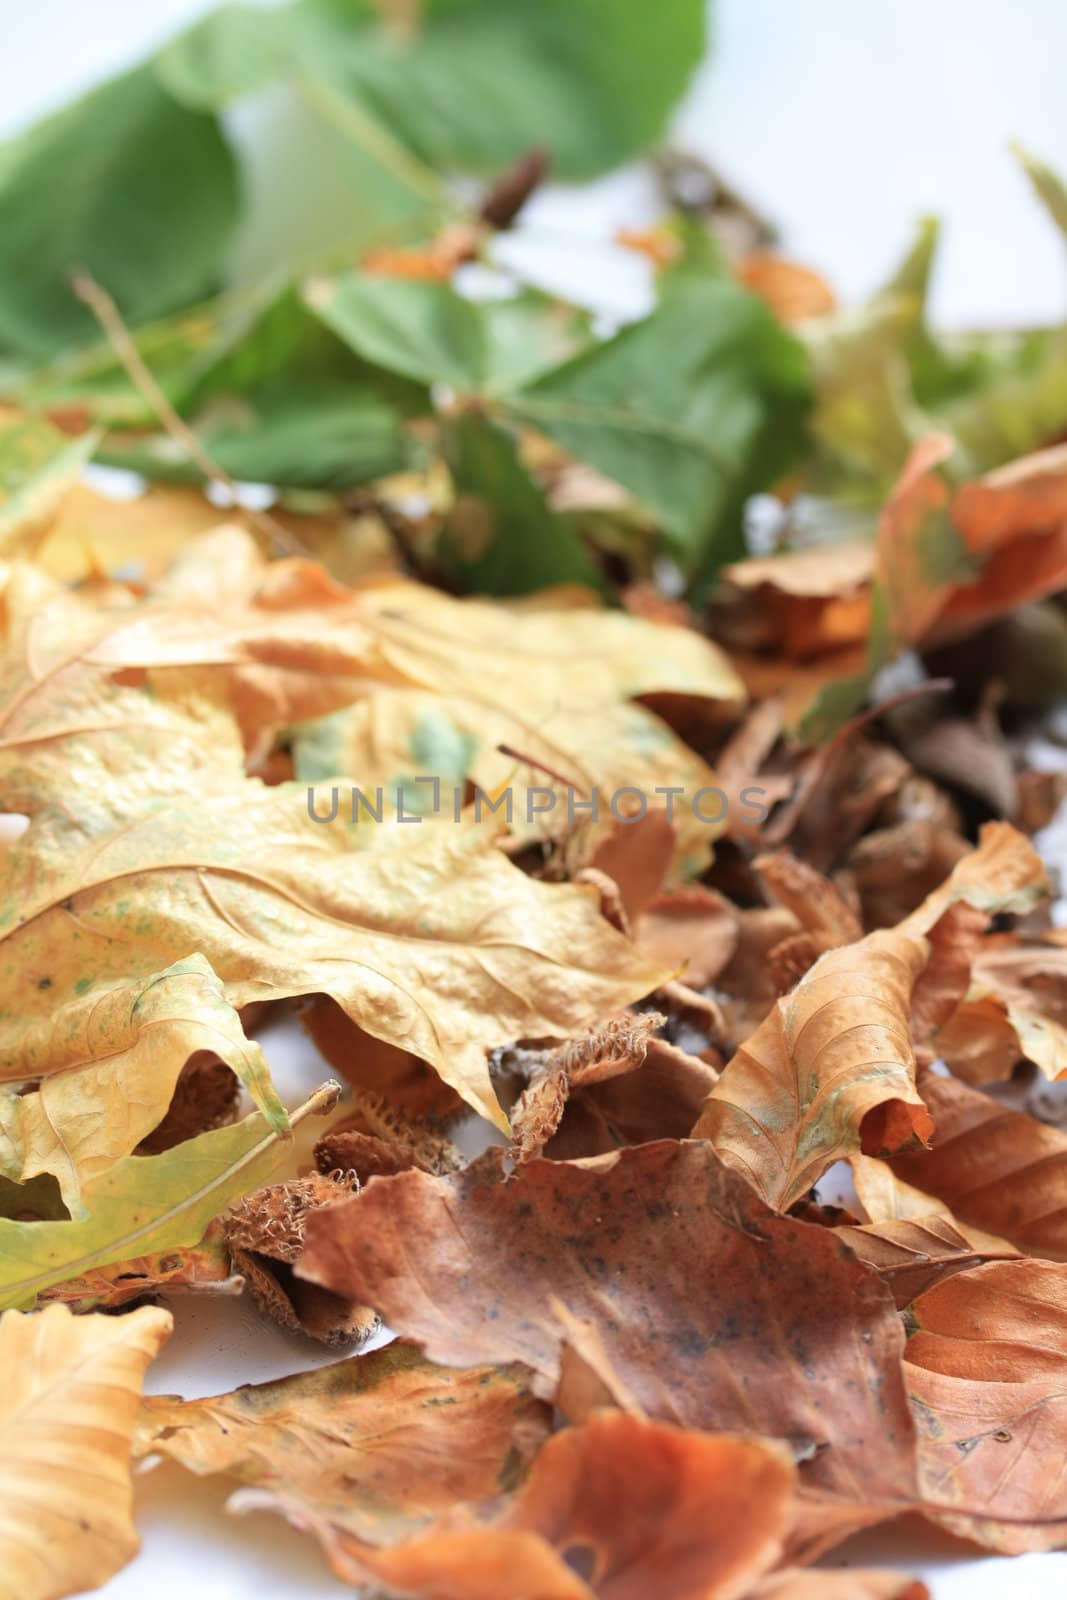 Autumn leaves by studioportosabbia